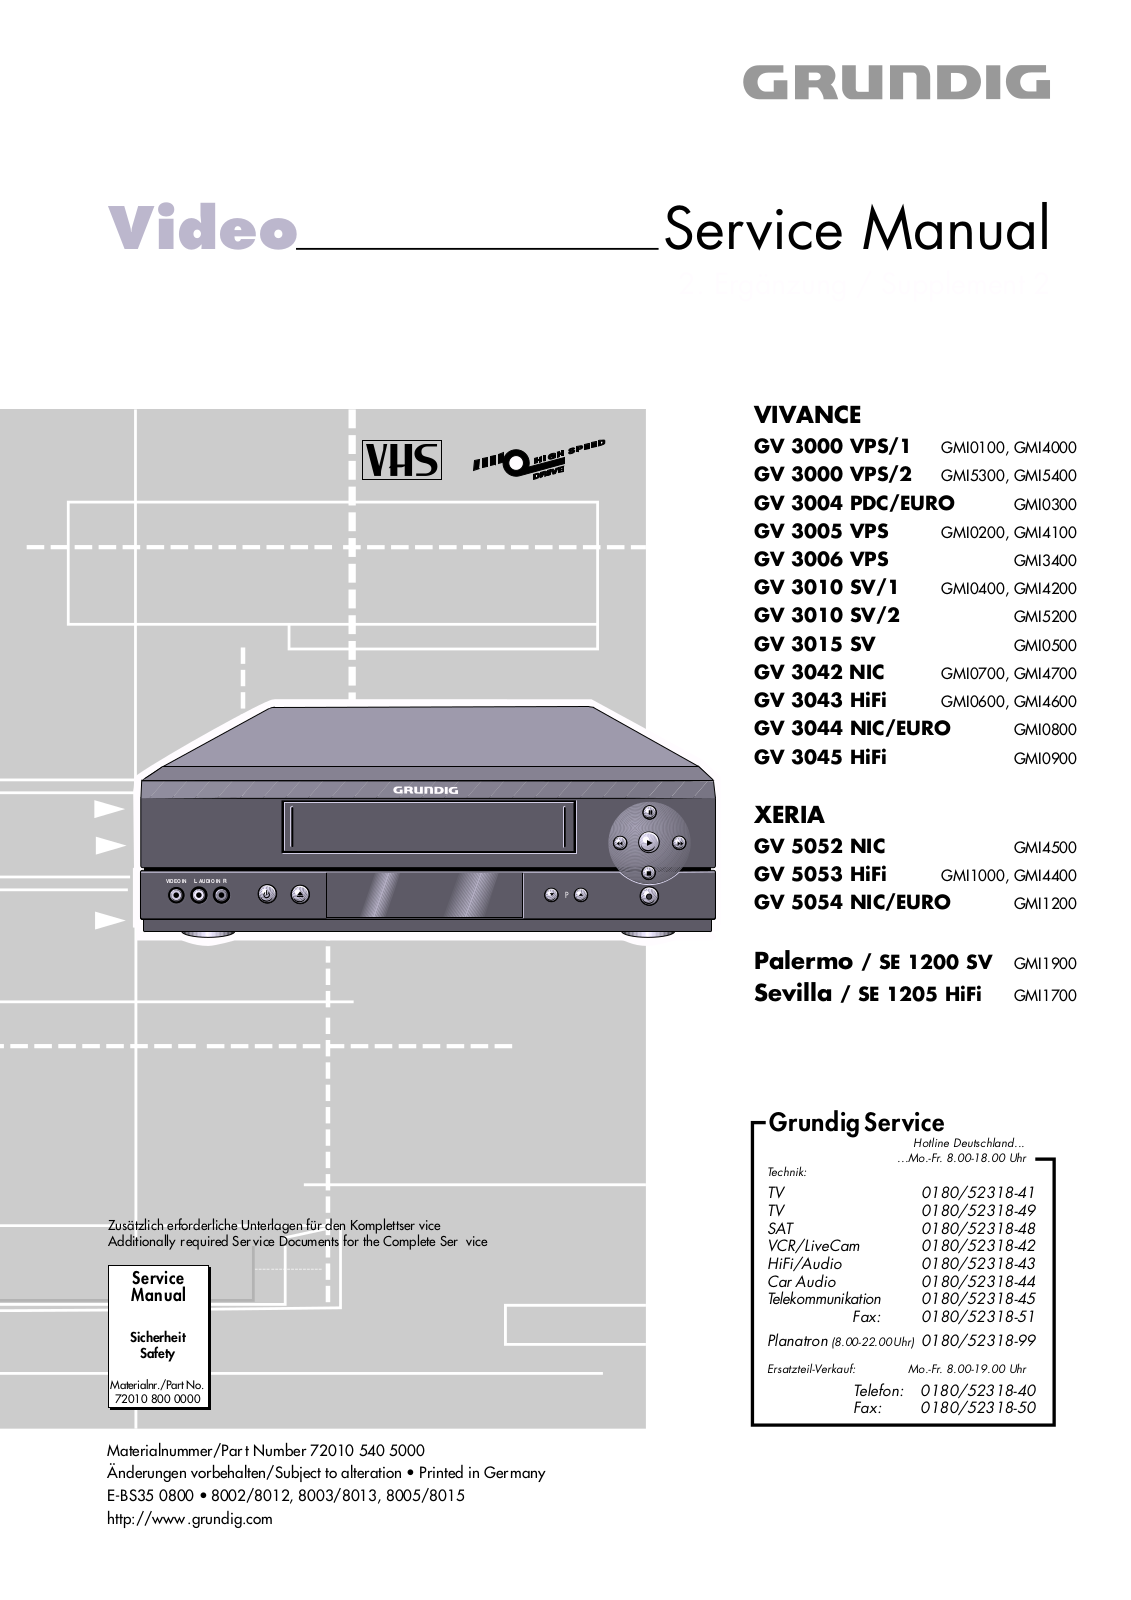 Grundig GV 5052 NIC, SE 1205 HiFi, SE 1200 SV, GV 5054 NIC-EURO, GV 5053 HiFi Service Manual